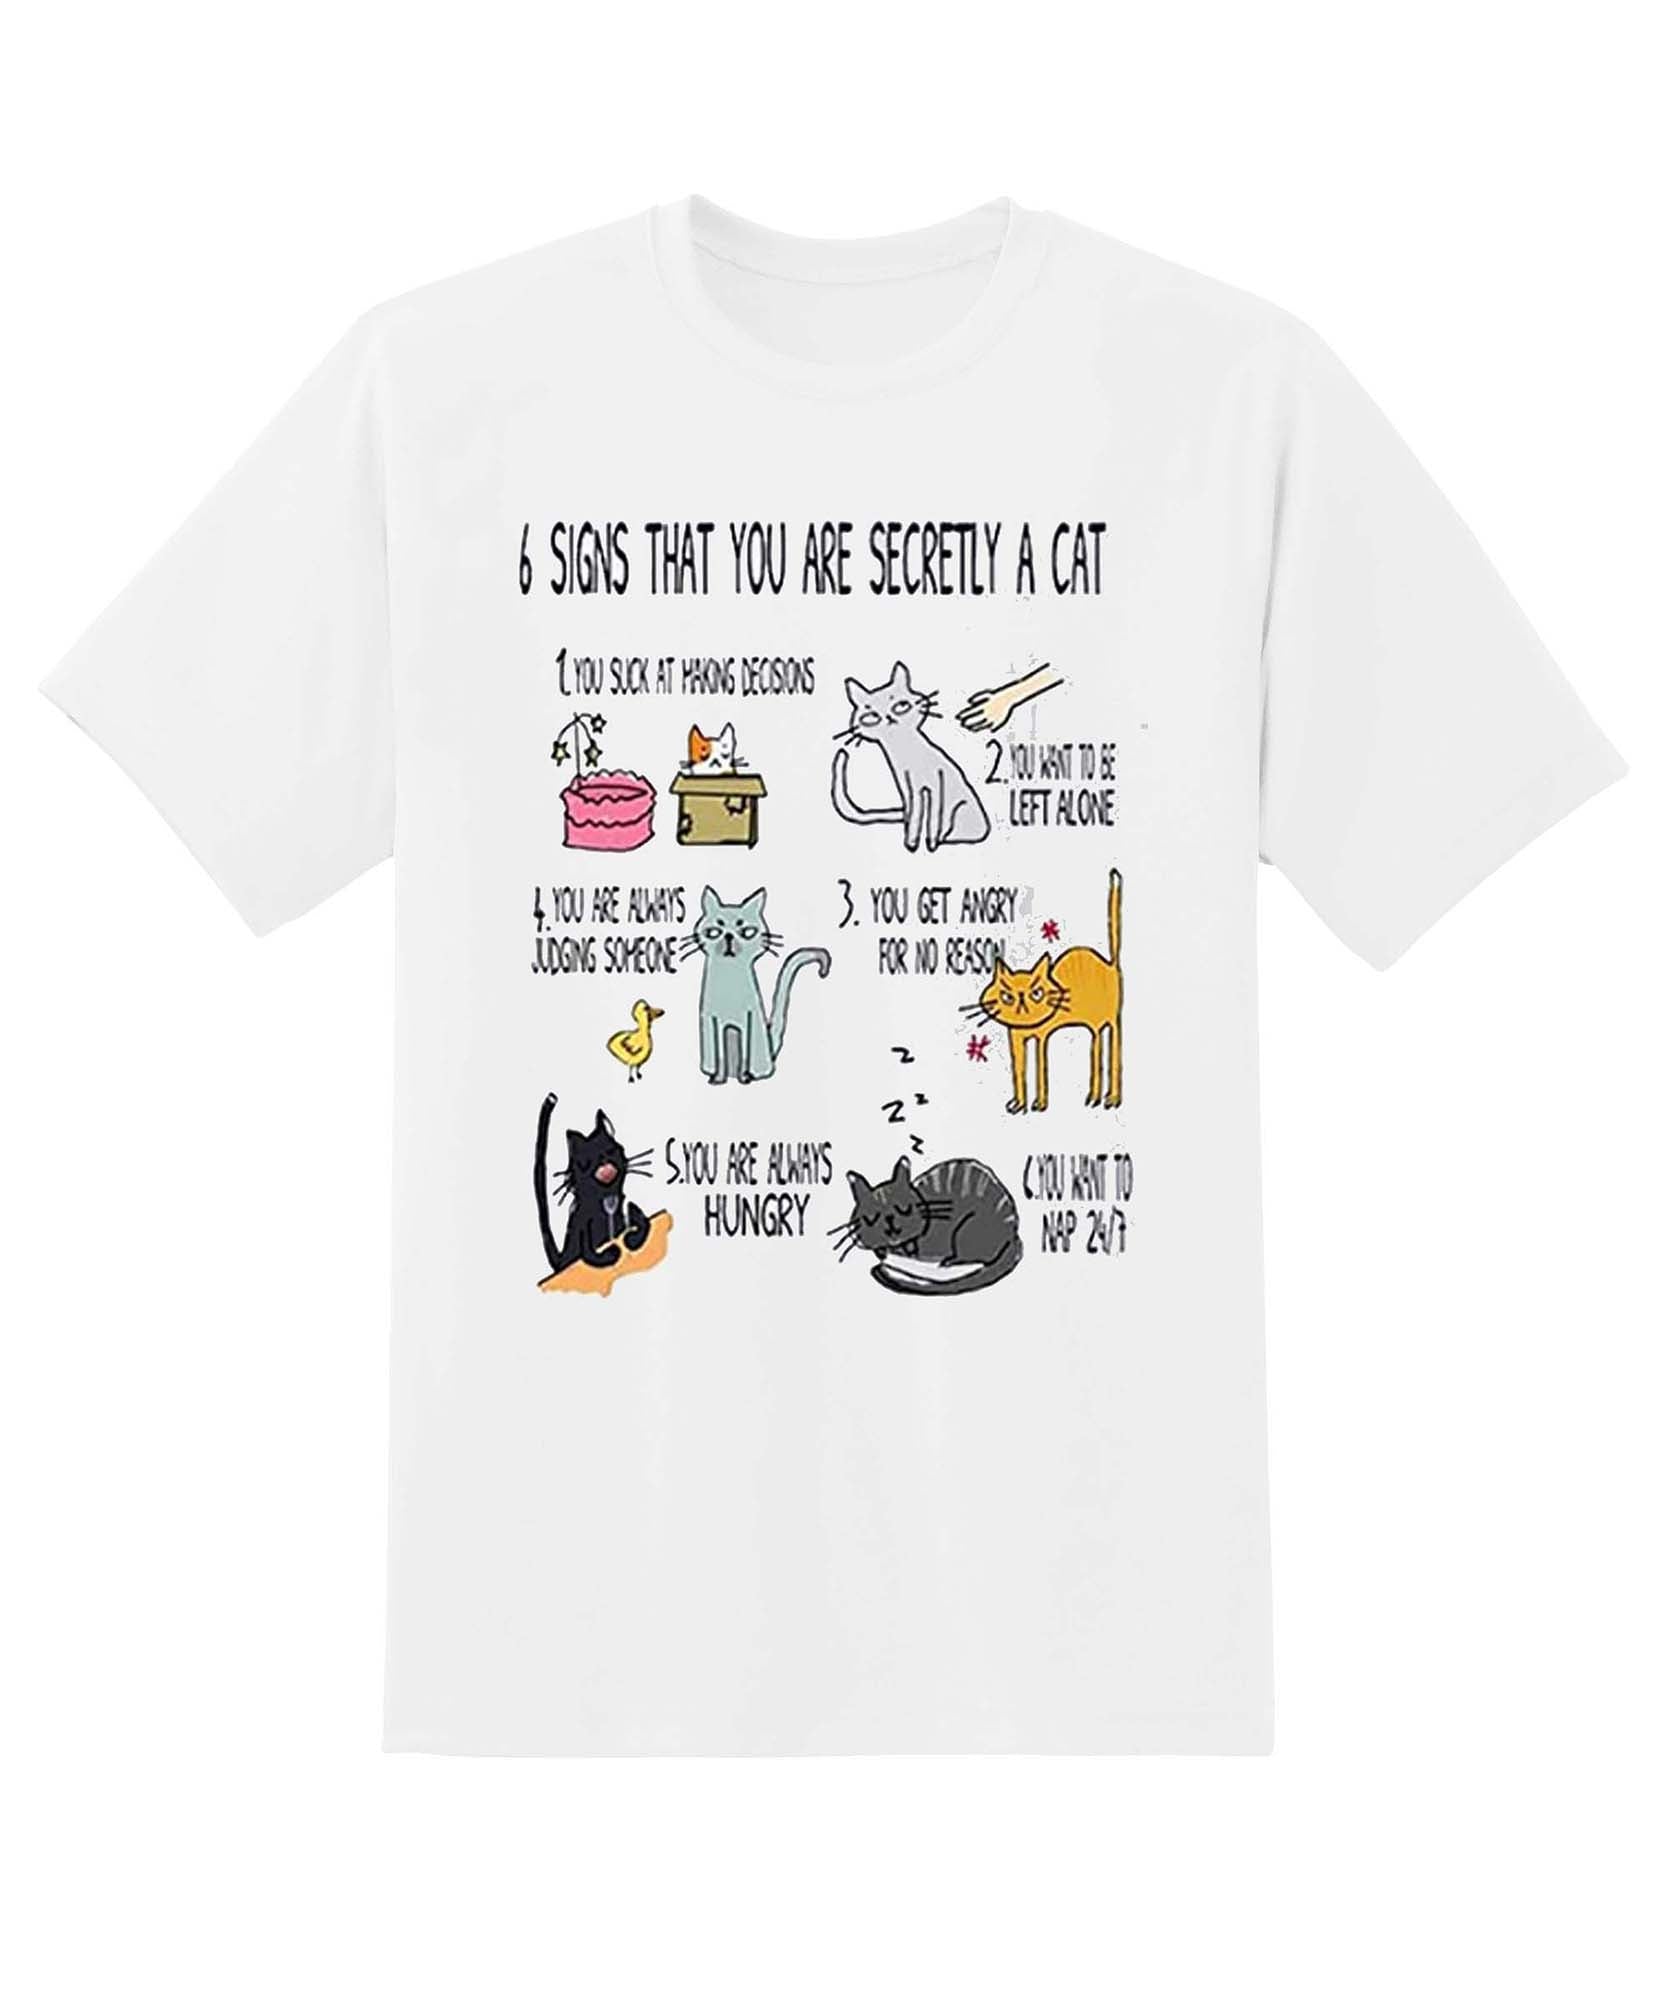 Skitongift 6 You Secretly Cat Mug Funny Cat Funny Shirts Hoodie Sweater Short Sleeve Casual Shirt